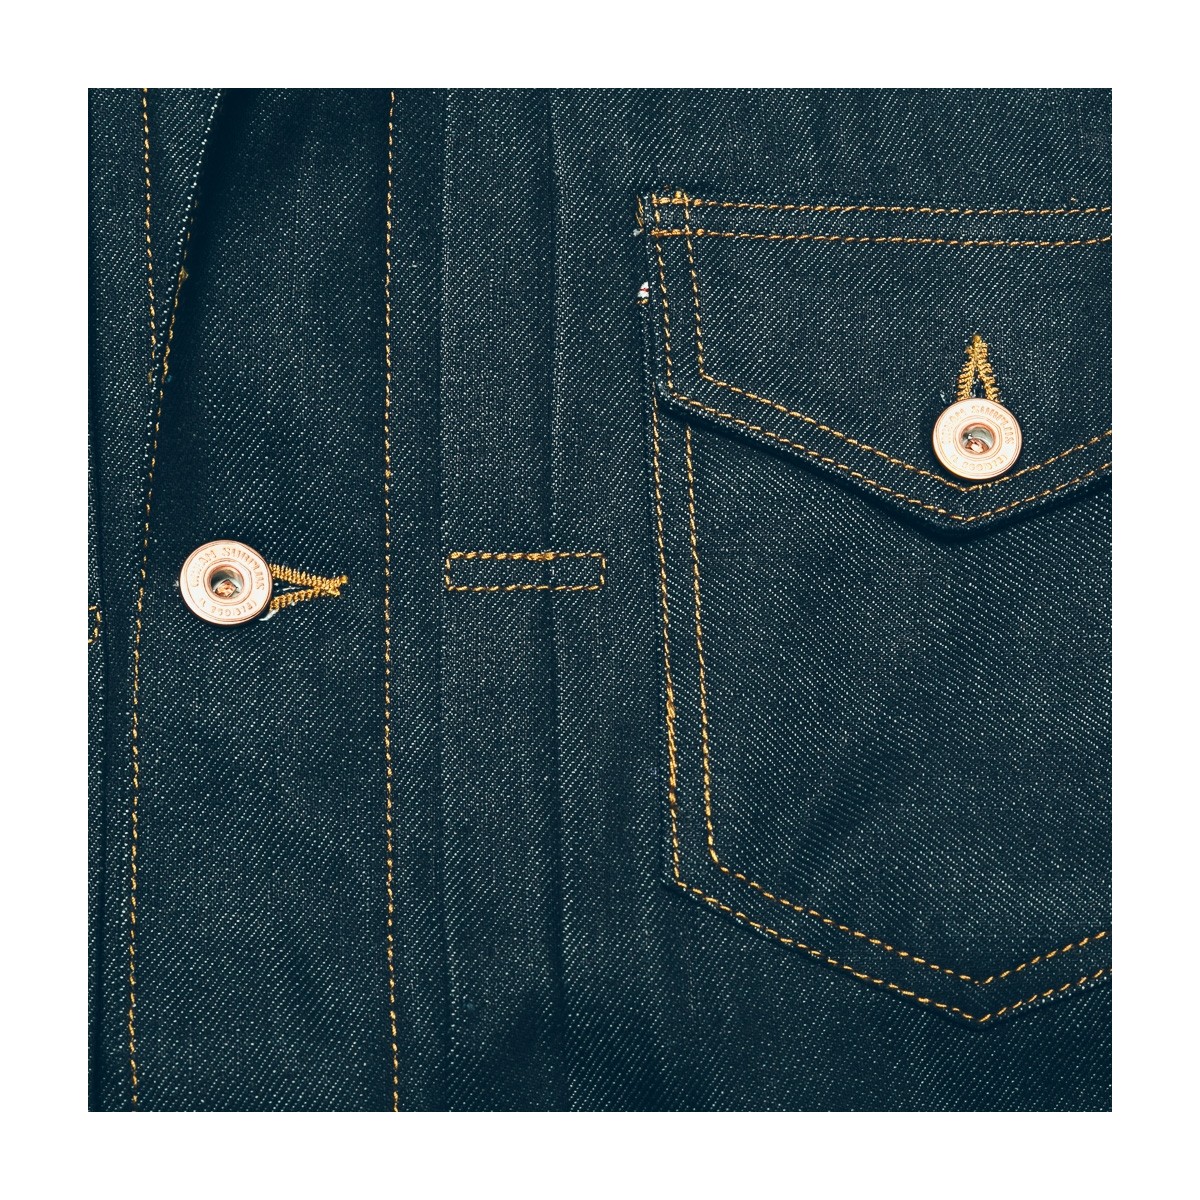 blouson-jean-denim-interieur-laine-motif-gipsy-detail-poche